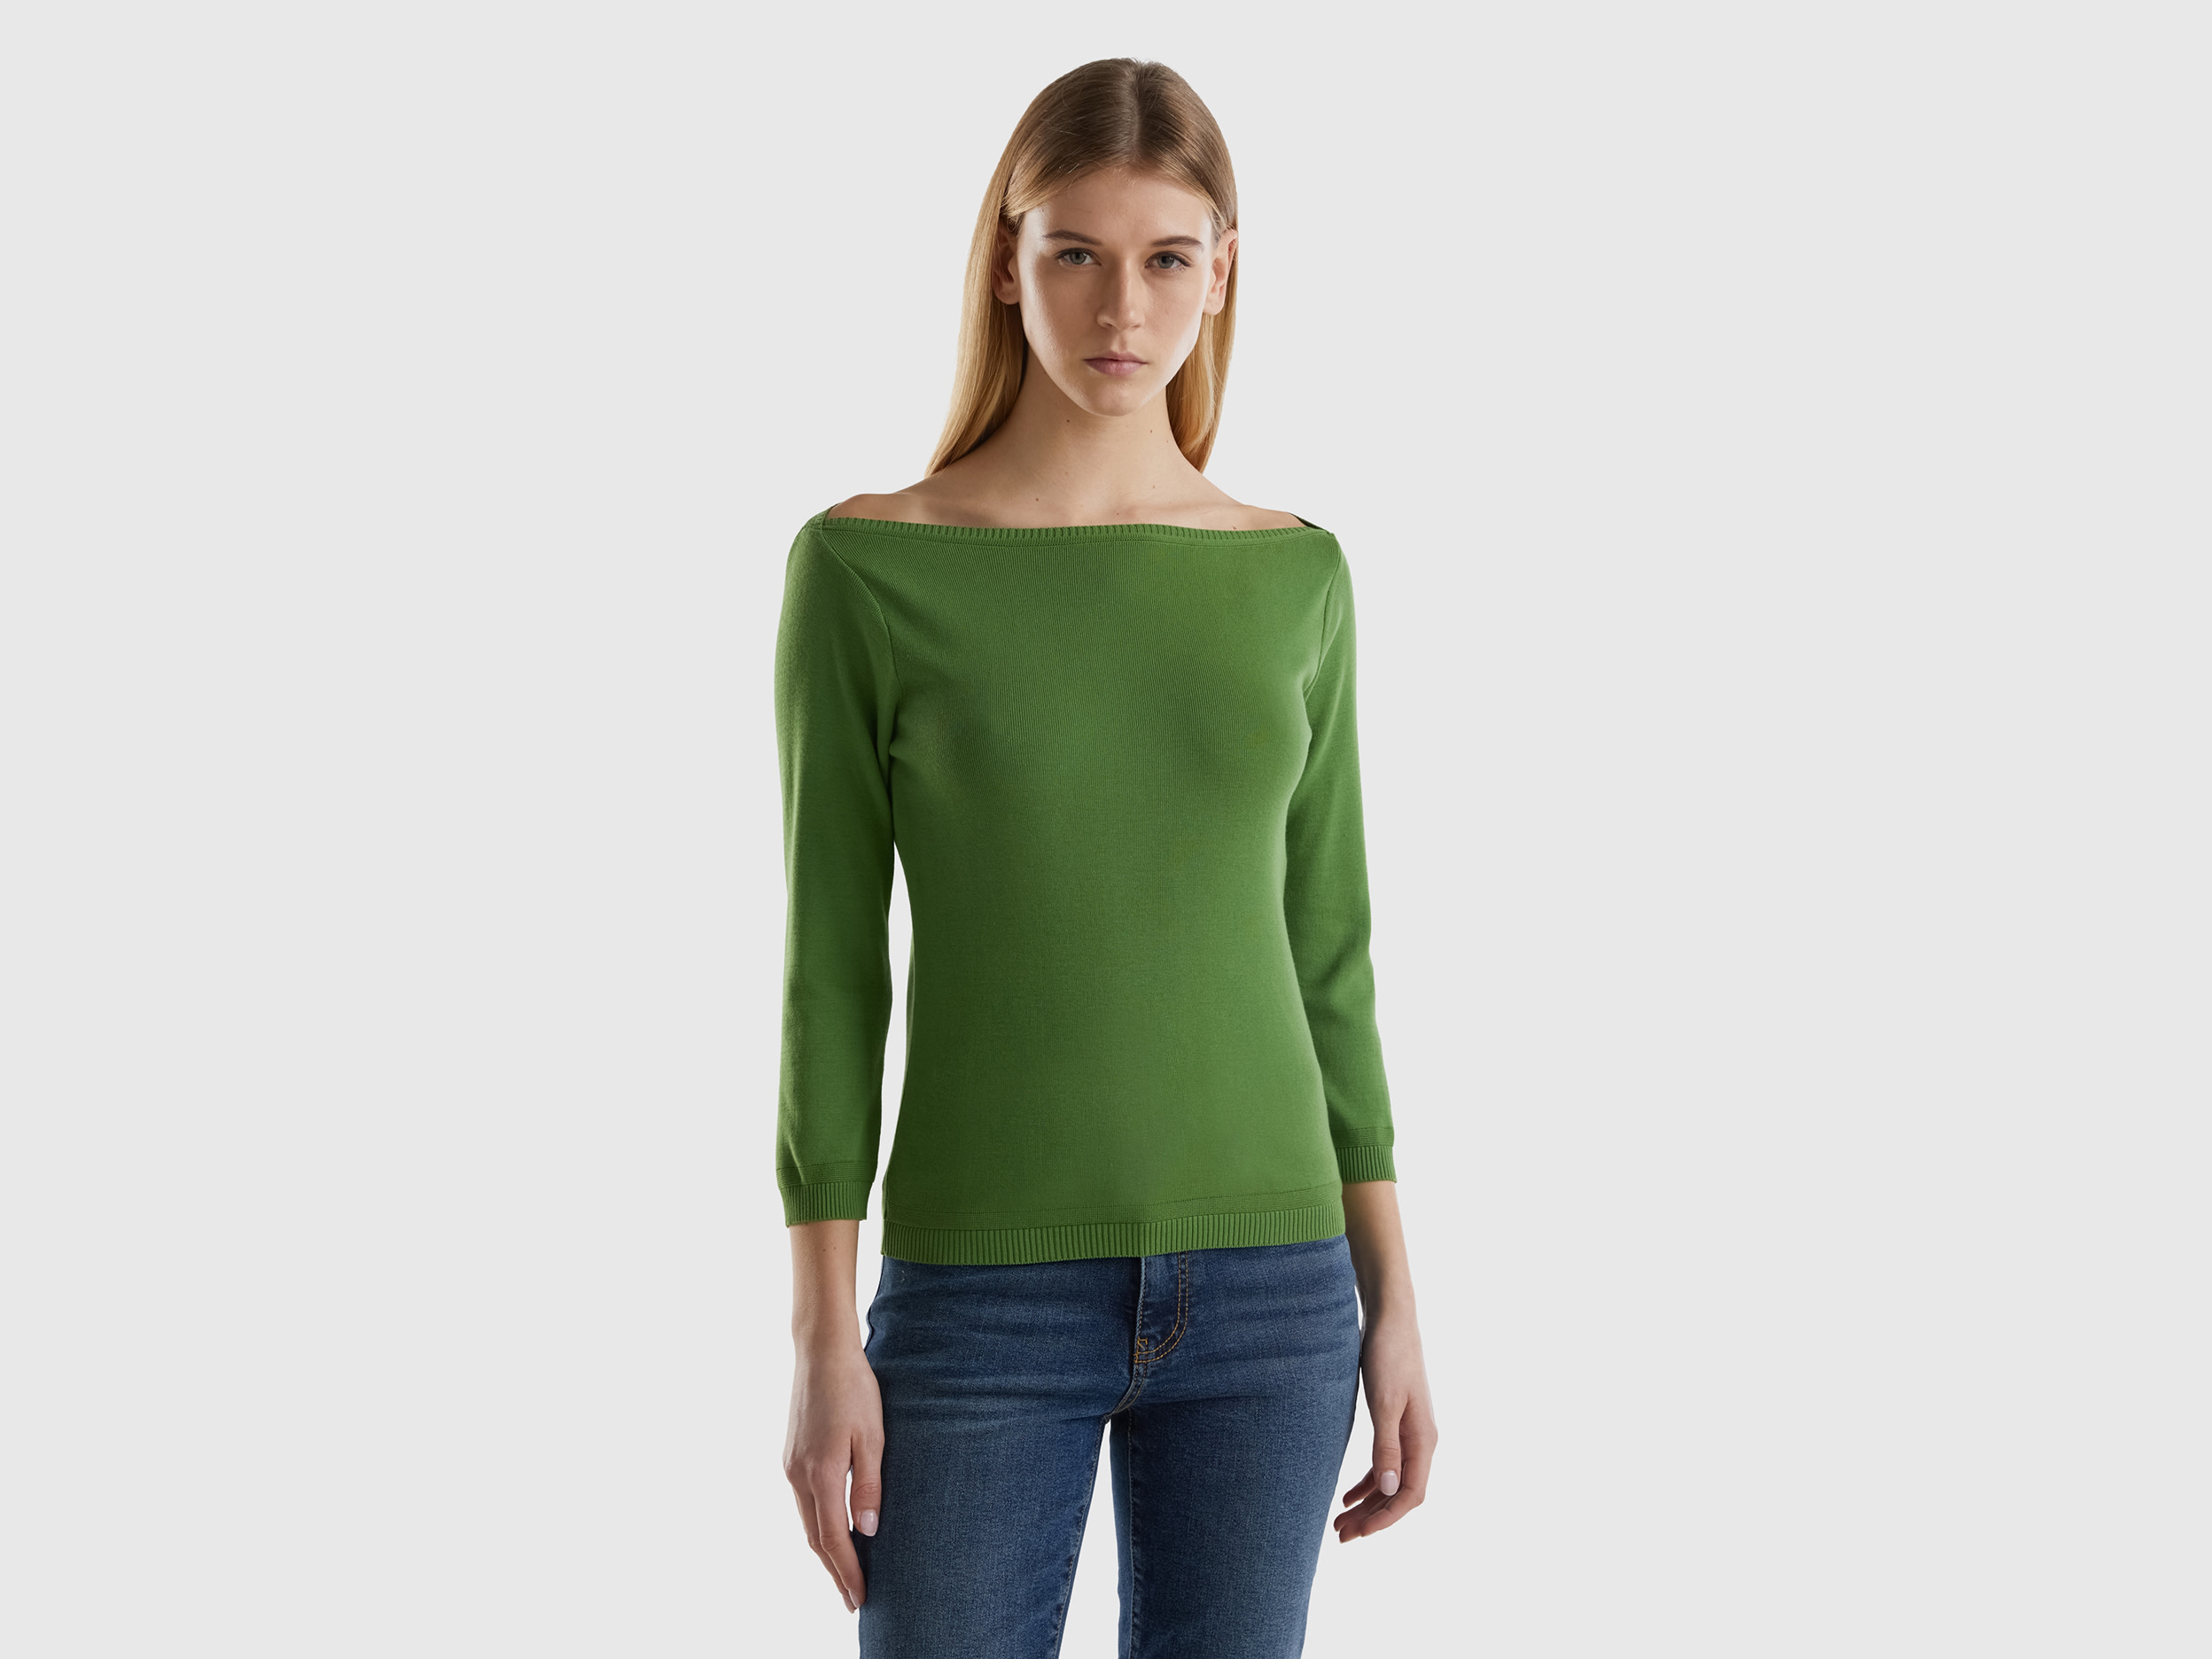 Benetton, 100% Cotton Boat Neck Sweater, size M, Military Green, Women